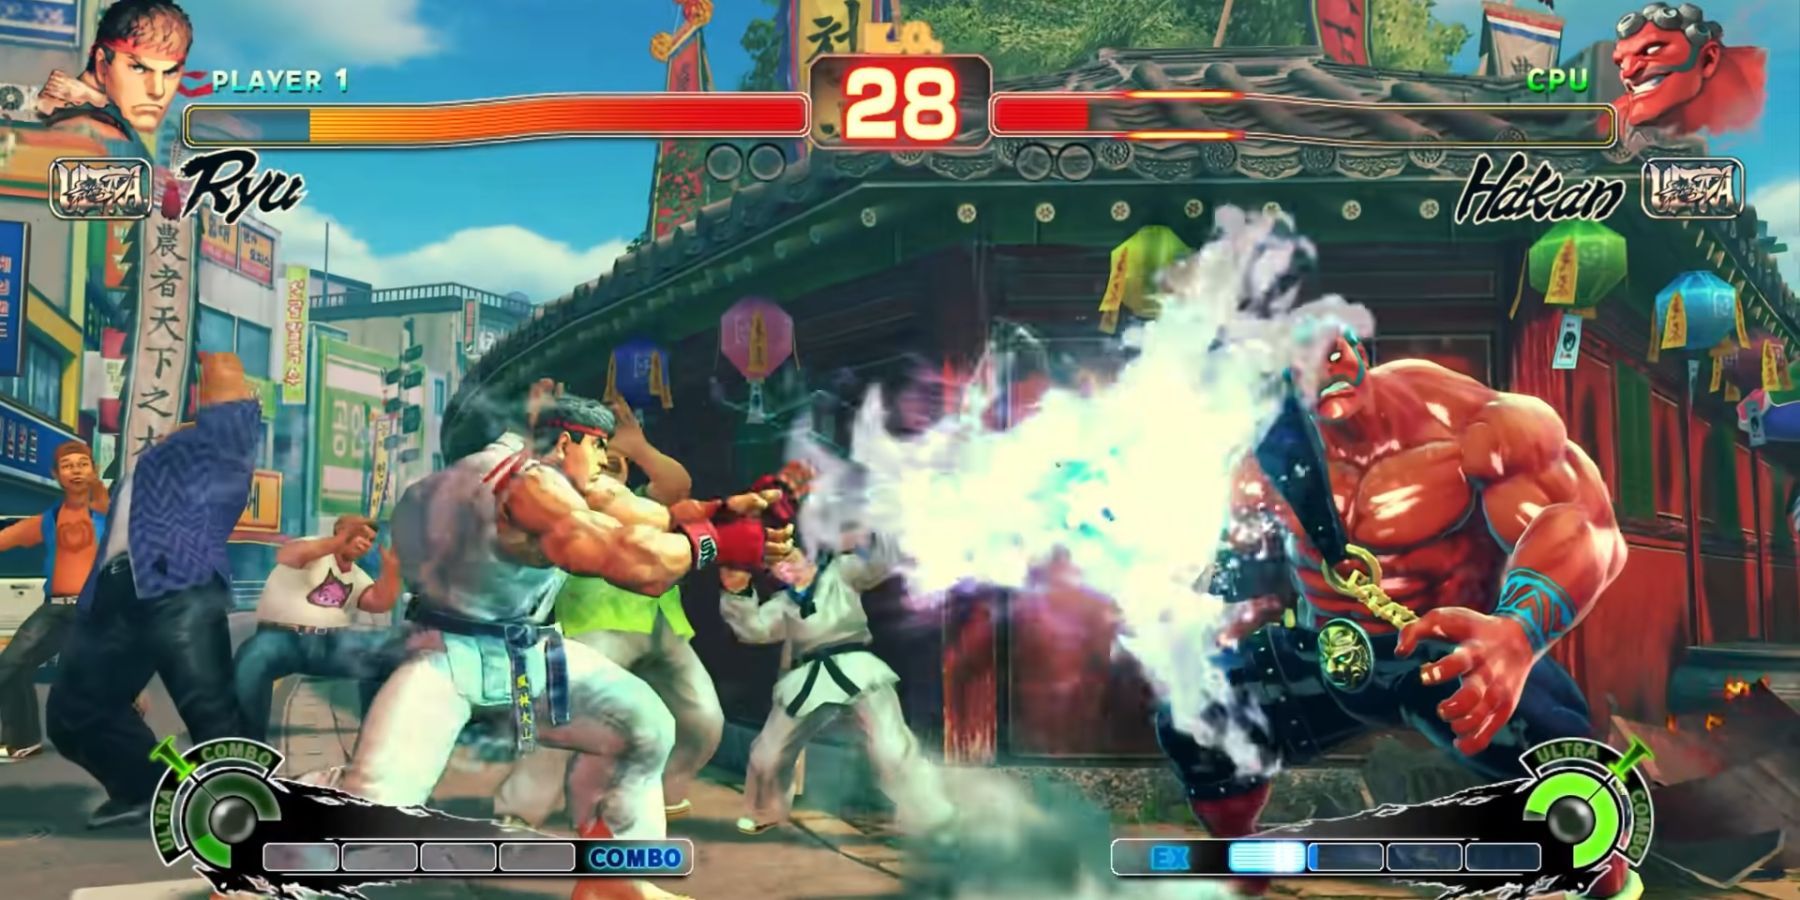 Ryu hitting Shinku Hadoken on Hakan